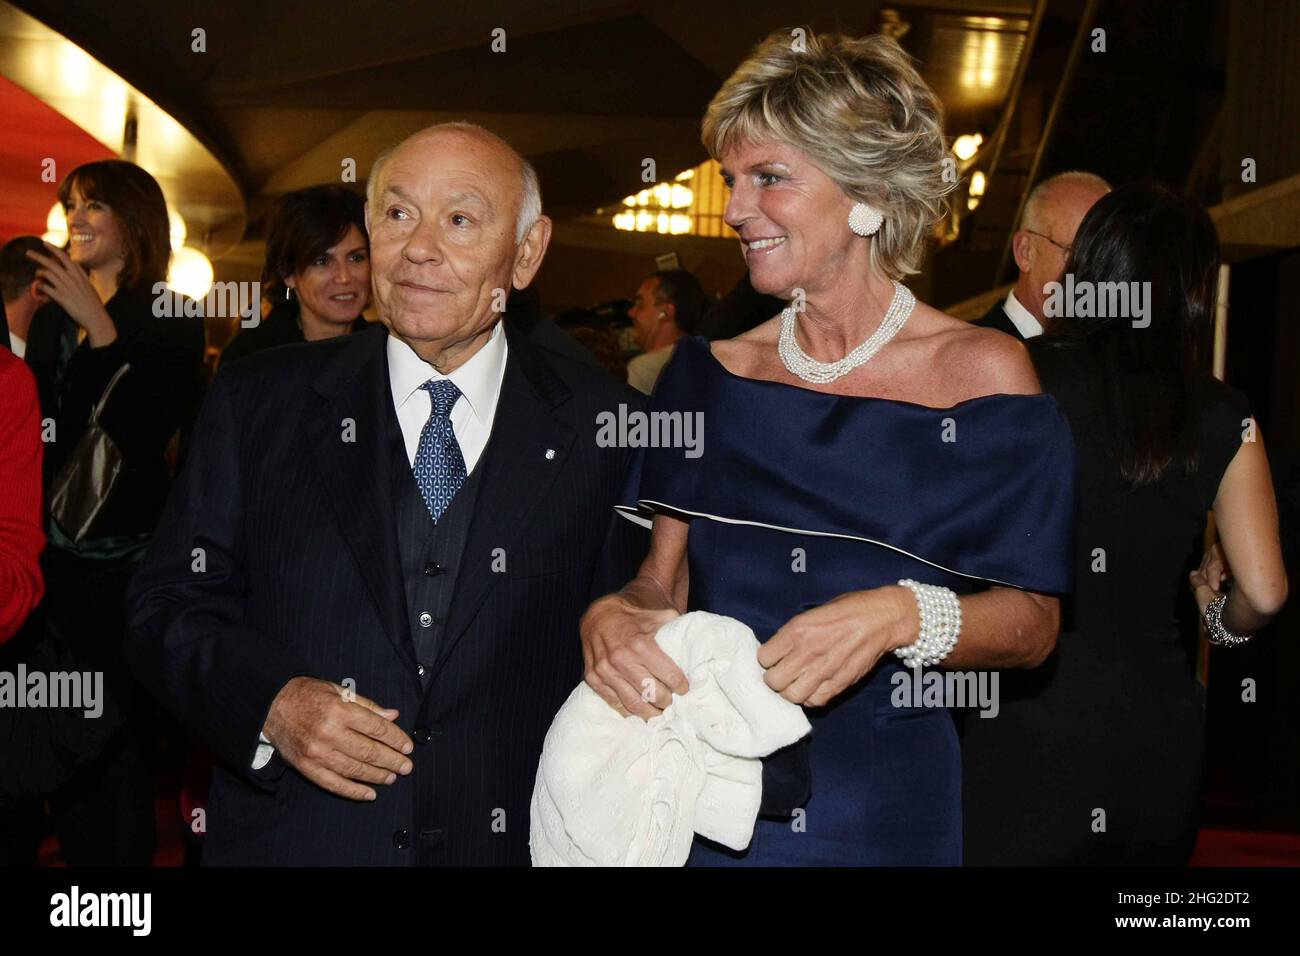 Salvatore Ligresti and Evelina Christillin attend the opening night of 'La Traviata' in Turin, Italy Stock Photo